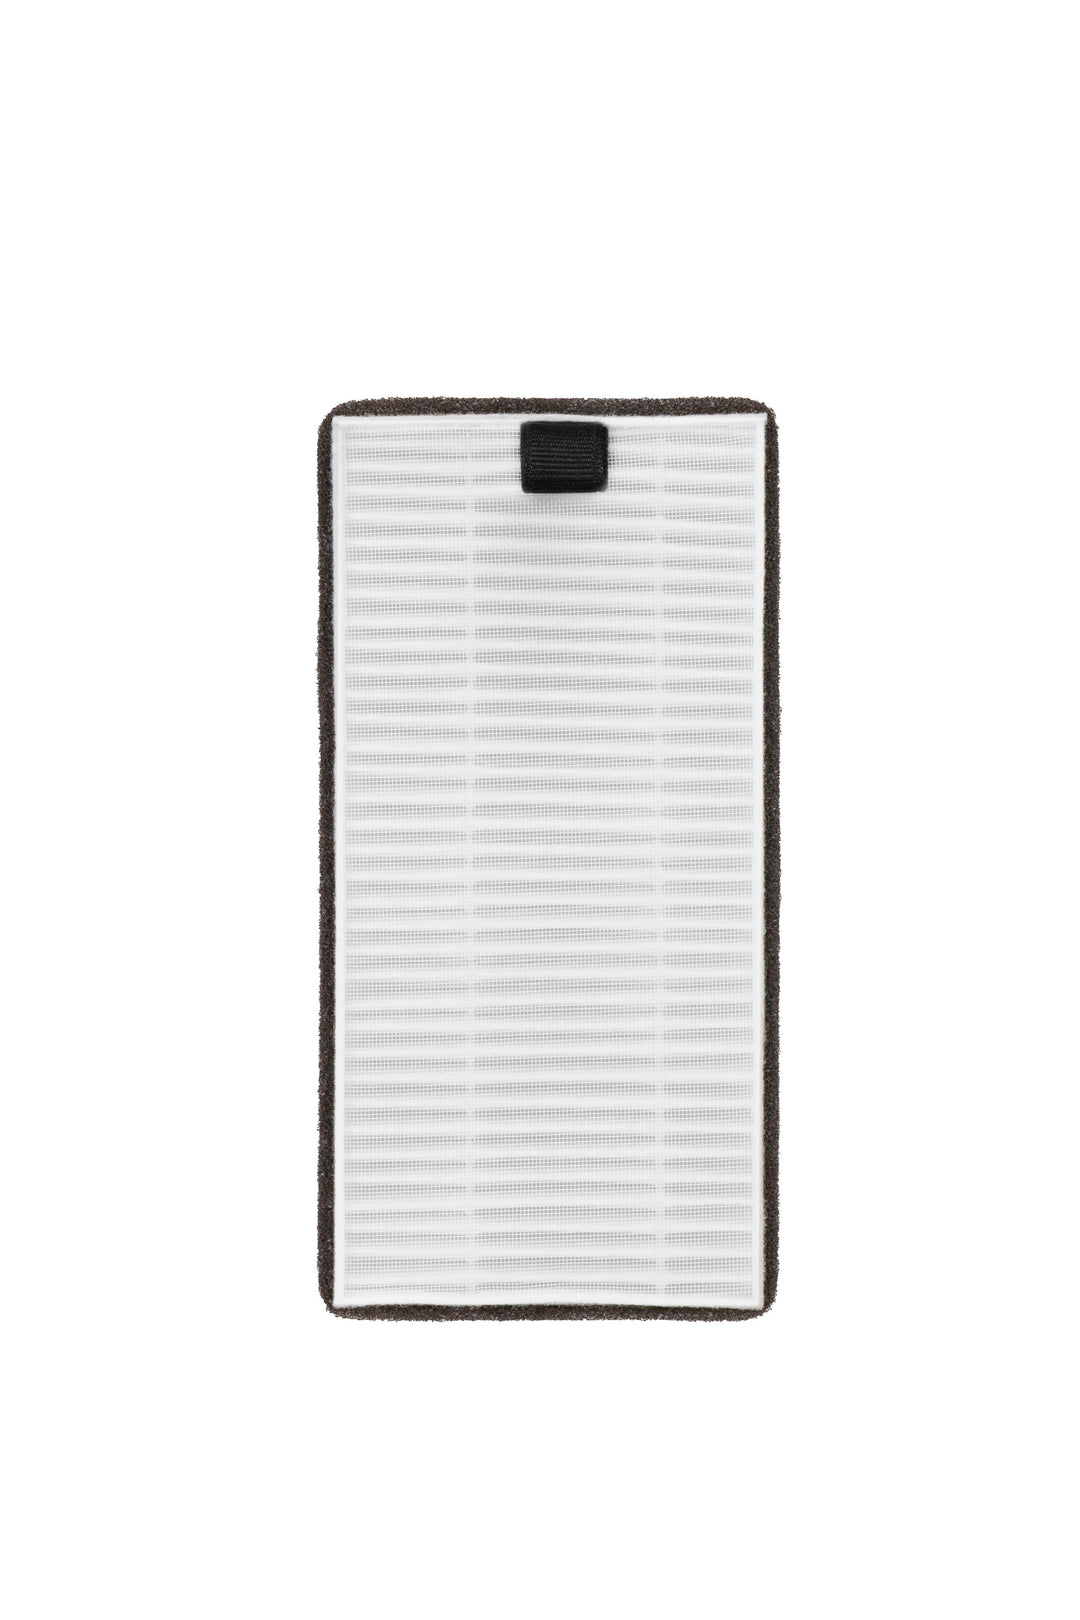 LG - PuriCare Mini Air Purifier - Black_9